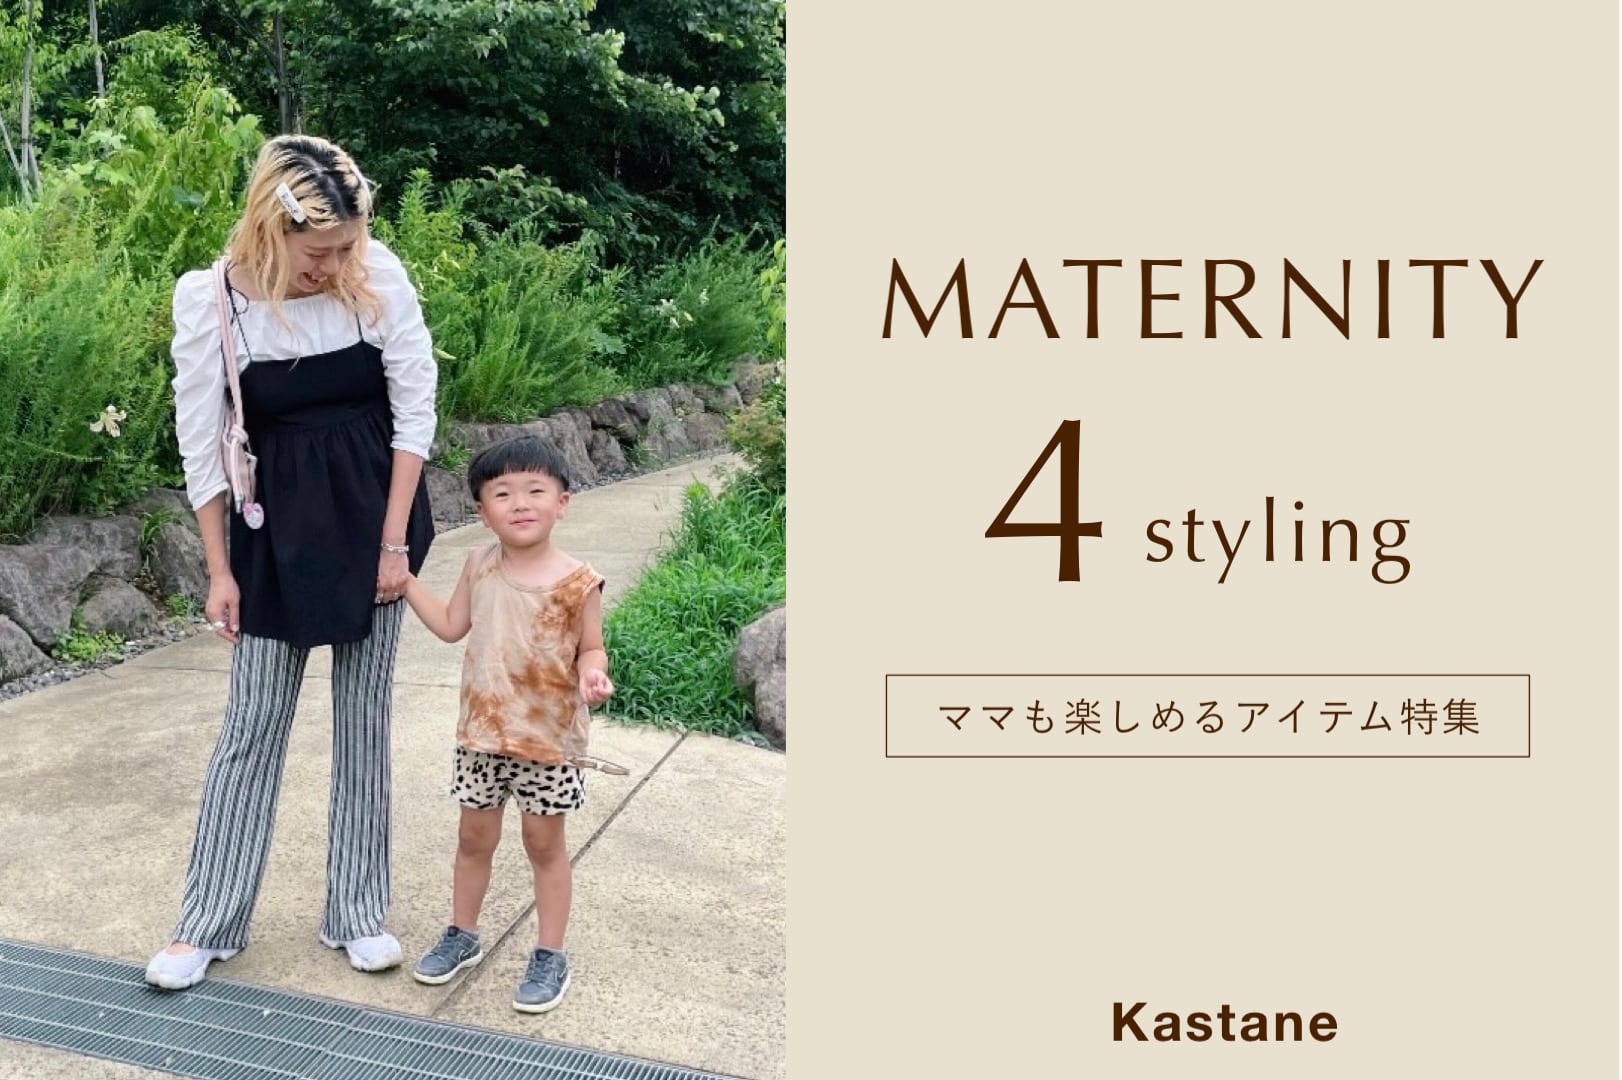 Kastane Maternity 4styling - ママも楽しめる、アイテム特集-